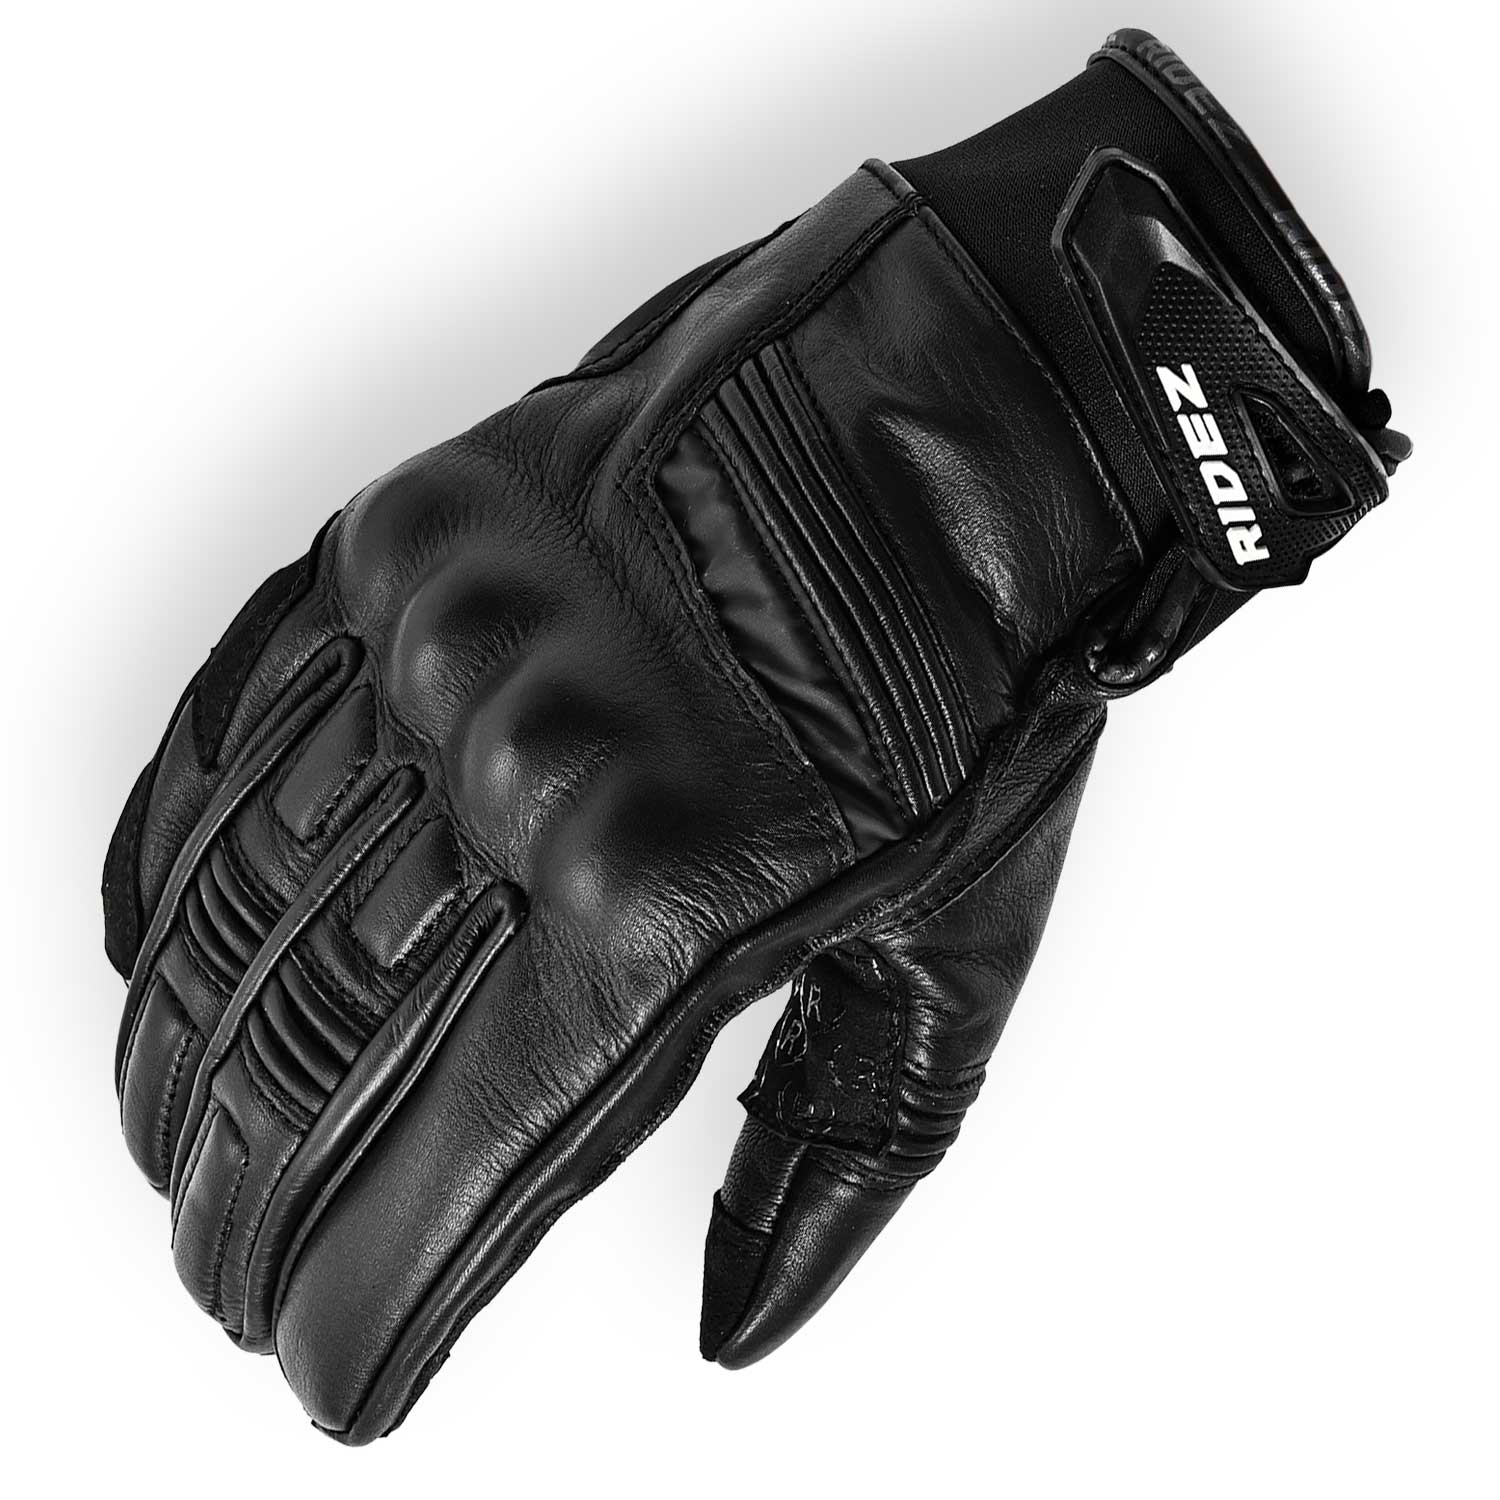 RIDEZ QUASAR GLOVES BLACK RLG263 Motorcycle Gloves 